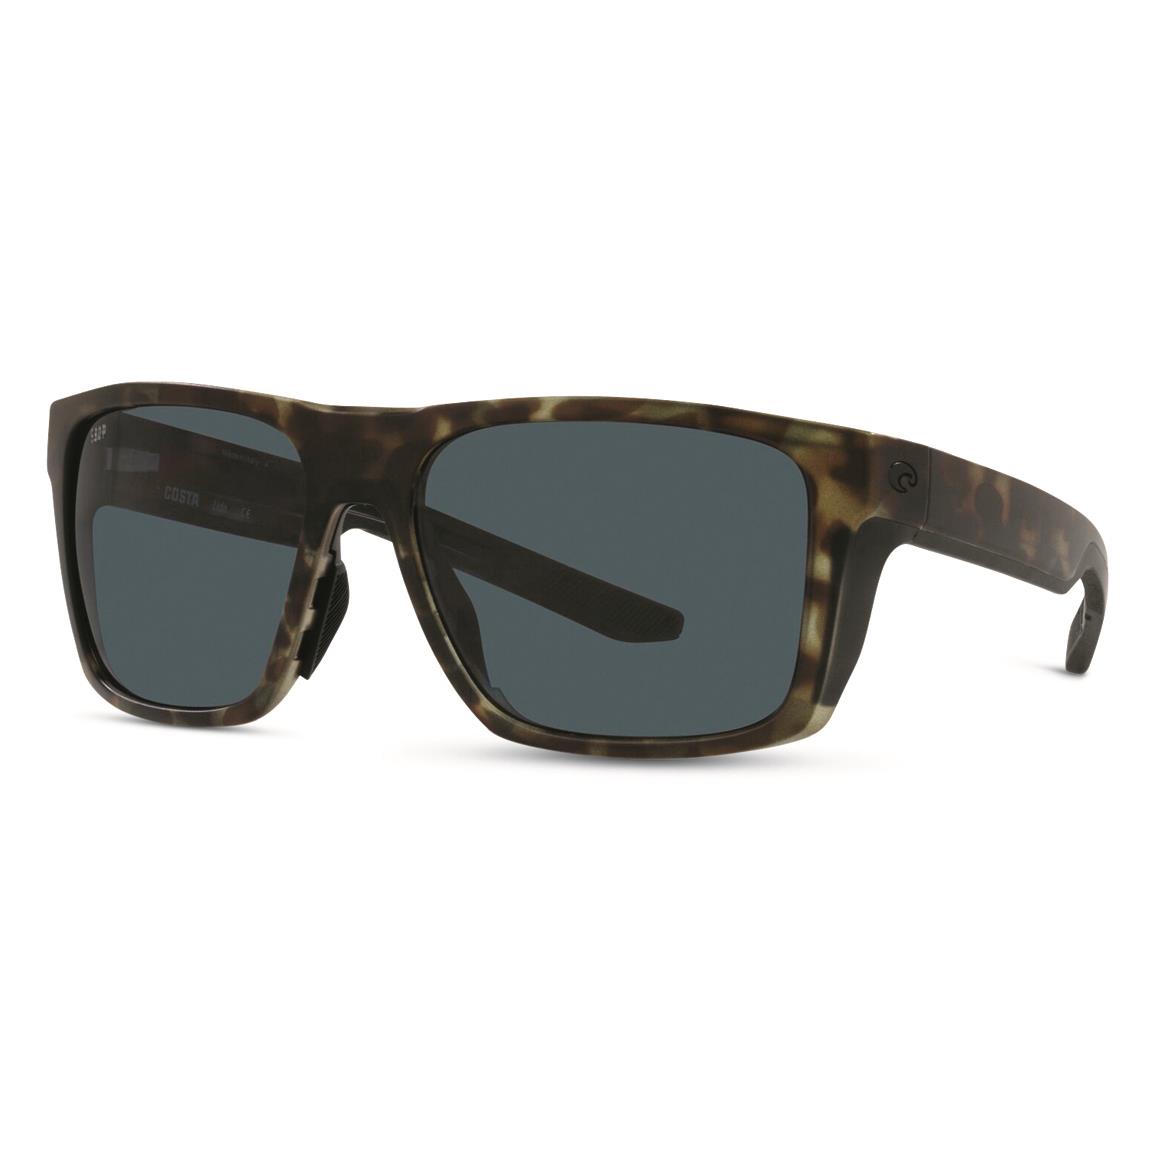 Costa Men's Lido 580P Polarized Sunglasses, Wetlands